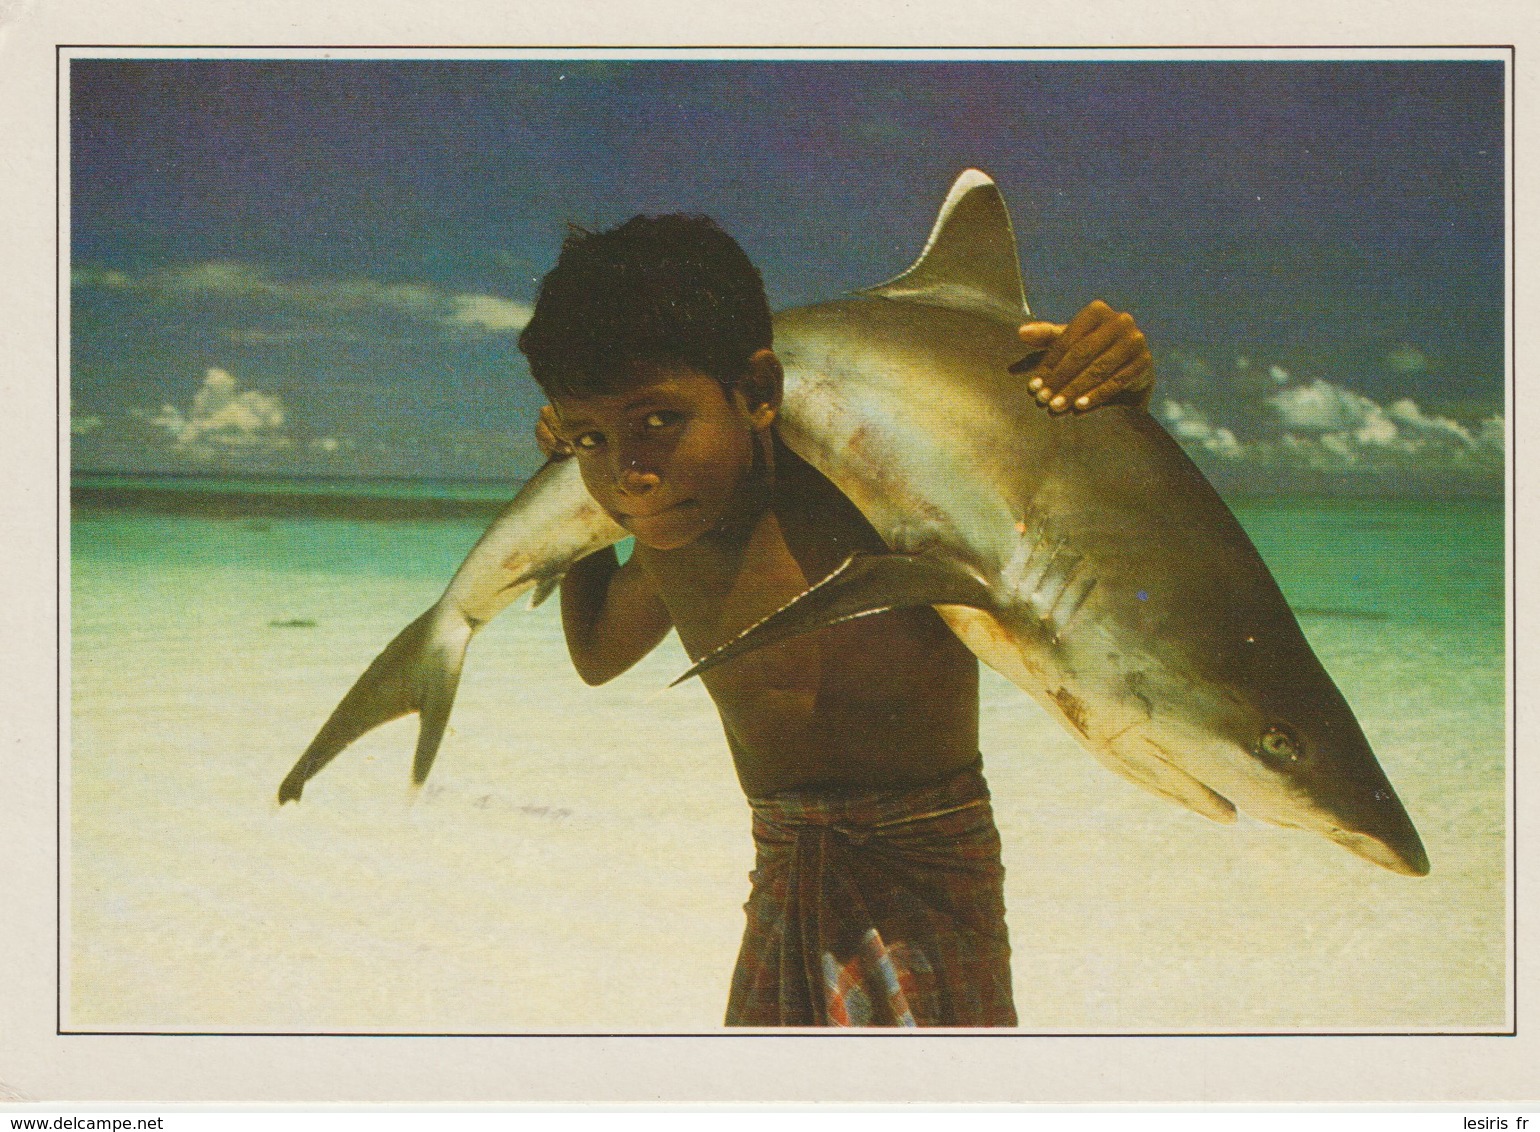 CP - PHOTO - MALEDIVEN XV - THE MALDIVES - WHITE TIPPED SHARK CARRIED BY A YOUNG CHILD - EDITO SERVICE - 1989 - 1990 - Maldive